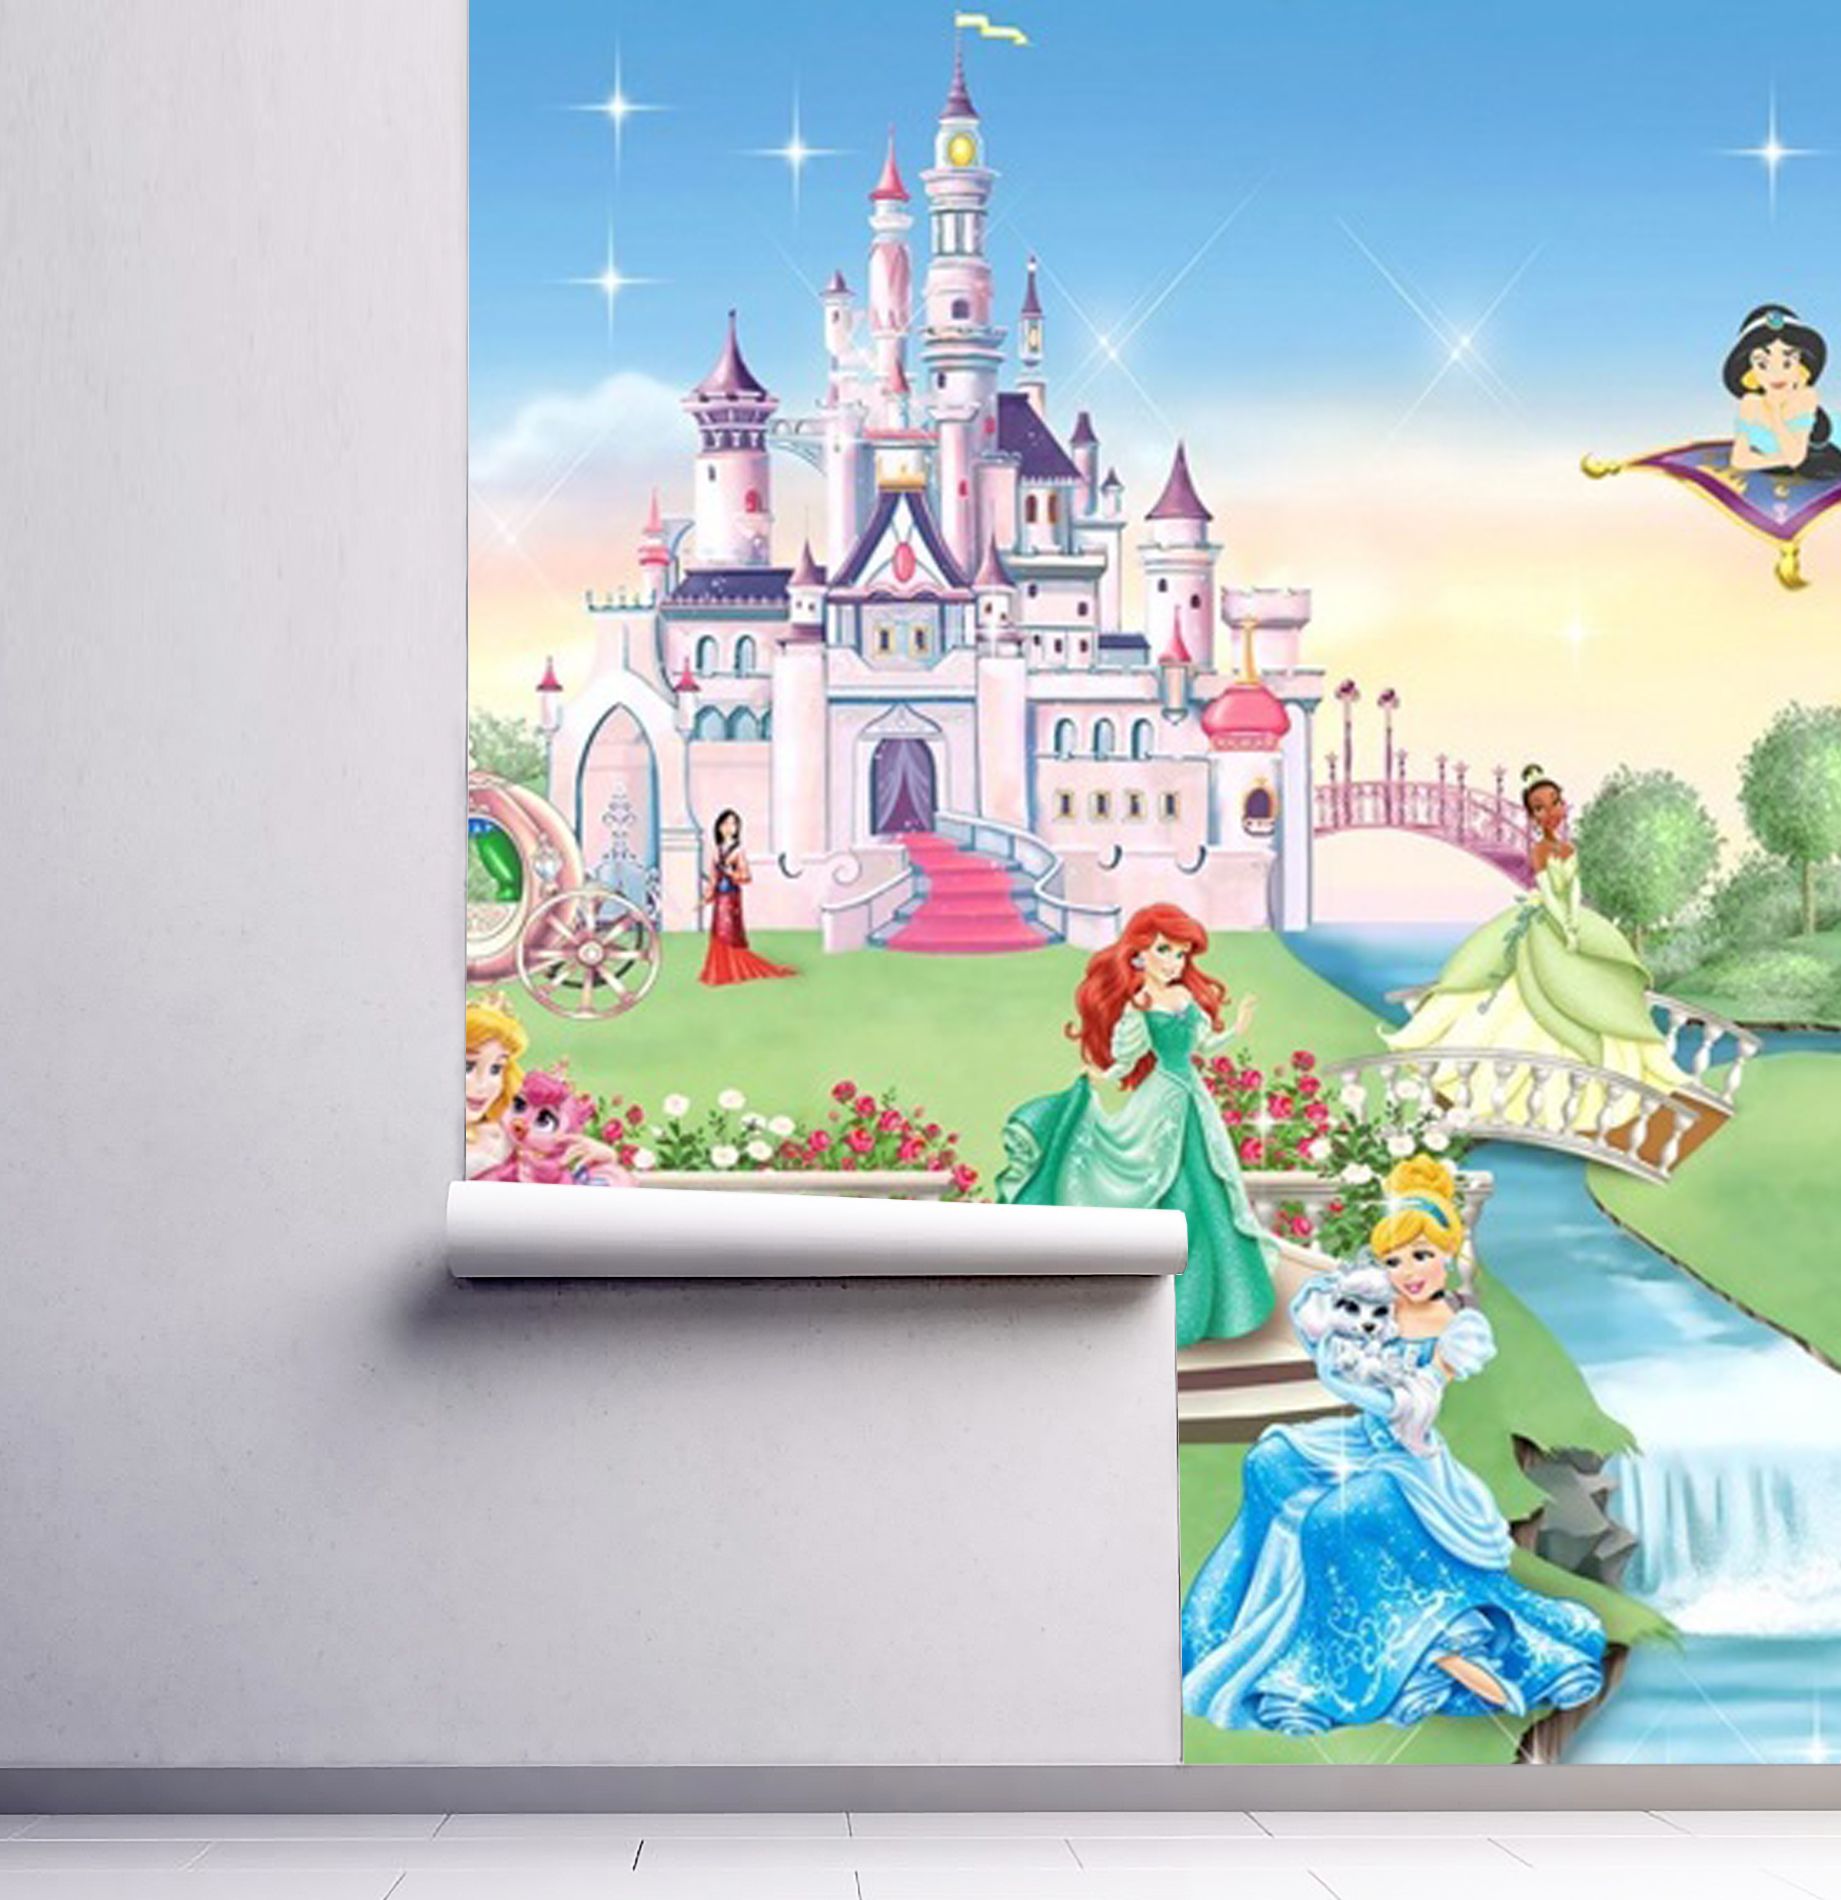 Wall Art Wallpaper, Decoration, Princess Disney, Nursery, Pocahontas, Jasmine, Snow White, Cinderella, Ariel, Rapunzel, Large Photo Wall Mural, Adhesive Viny